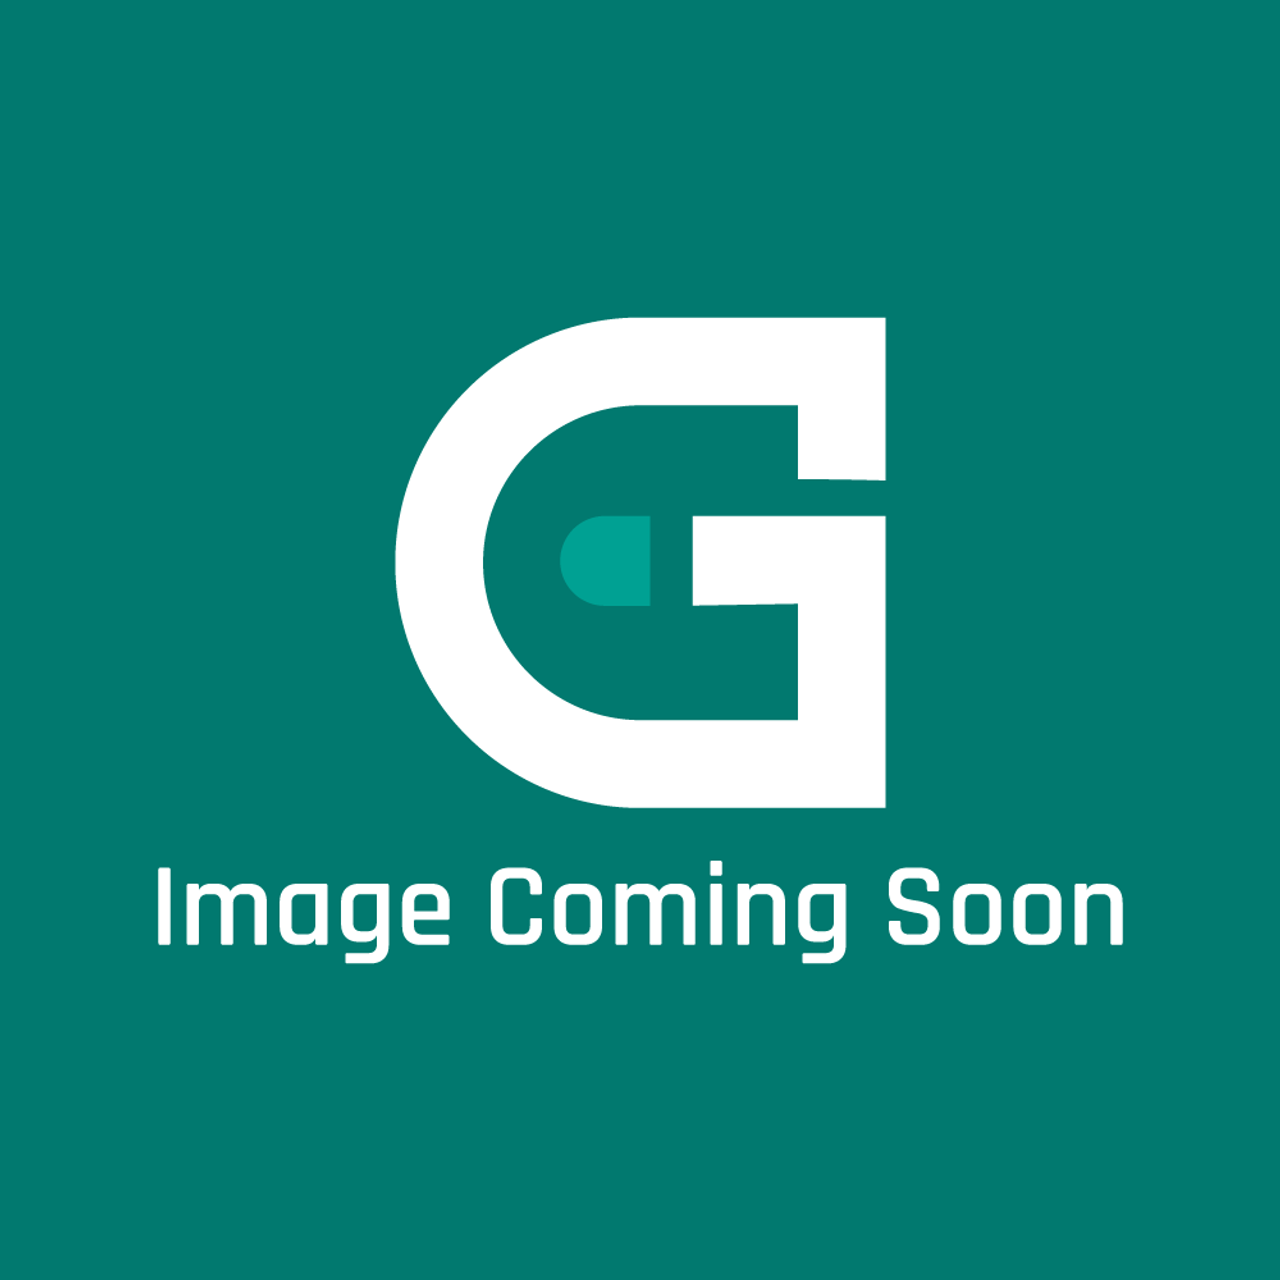 Frigidaire - Electrolux 5304534930 Base - Image Coming Soon!